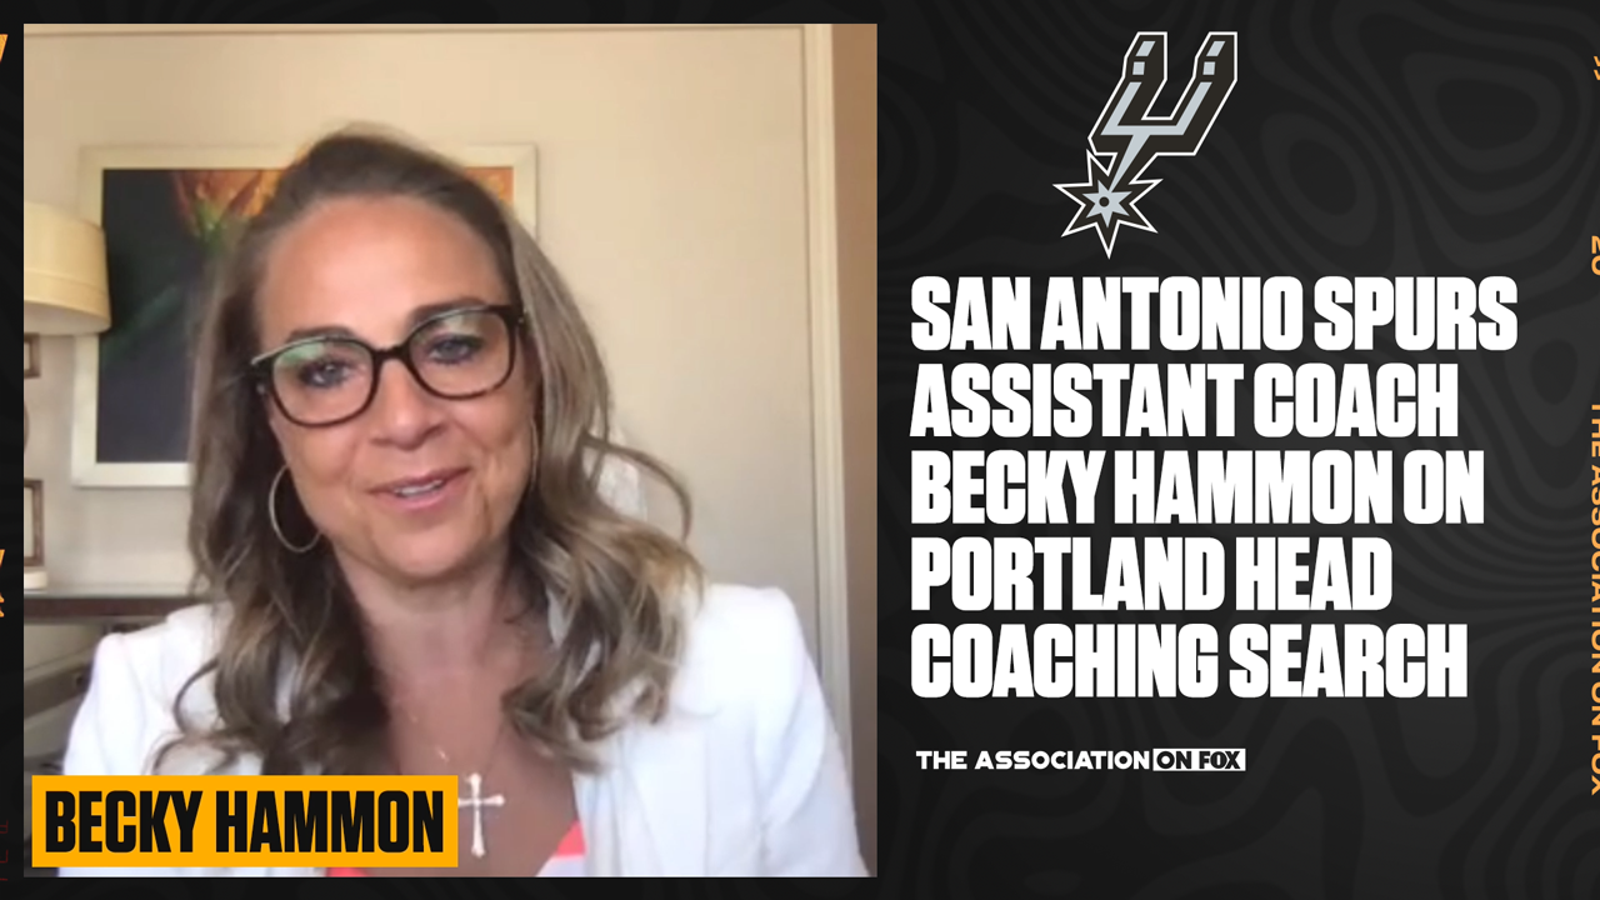 Becky Hammon on Portland head coaching search